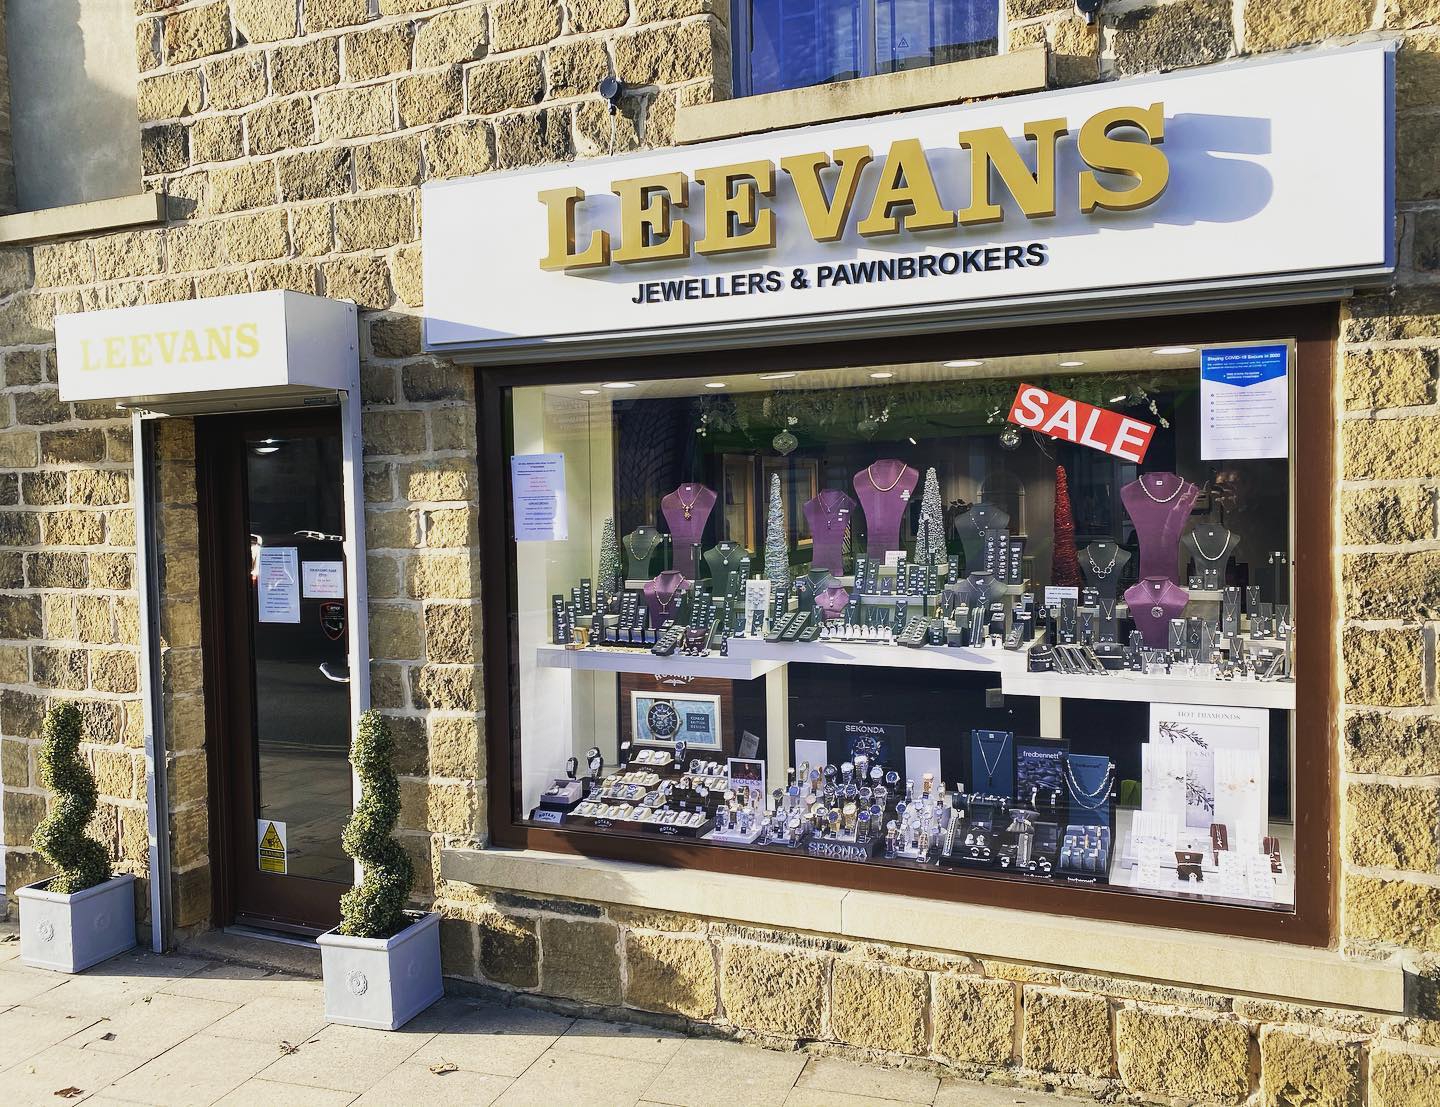 Leevans Jewellers & Pawnbrokers Ltd